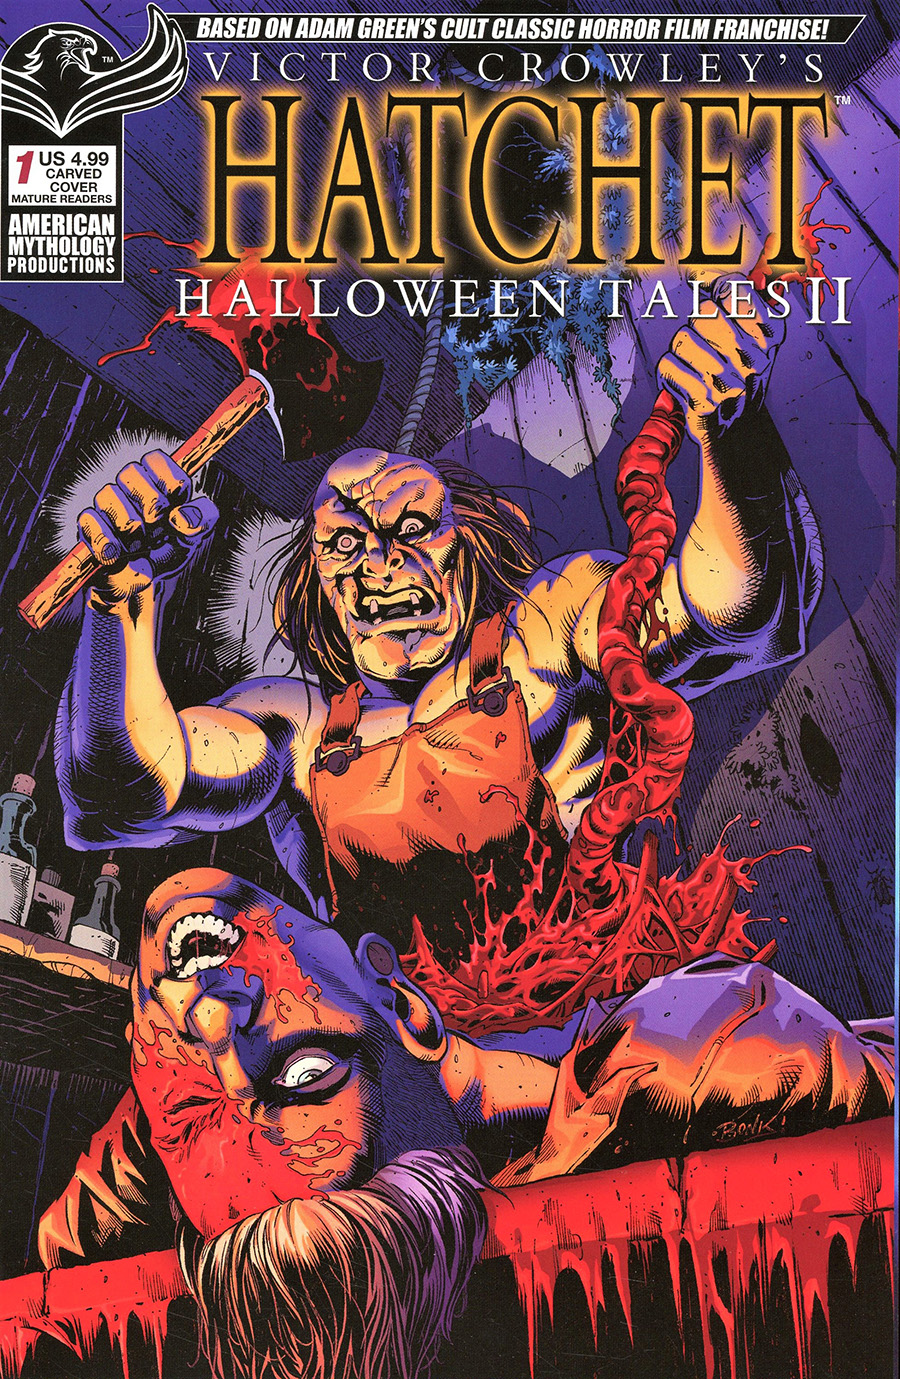 Victor Crowleys Hatchet Halloween Tales II Cover B Variant Richard Bonk Carved Cover